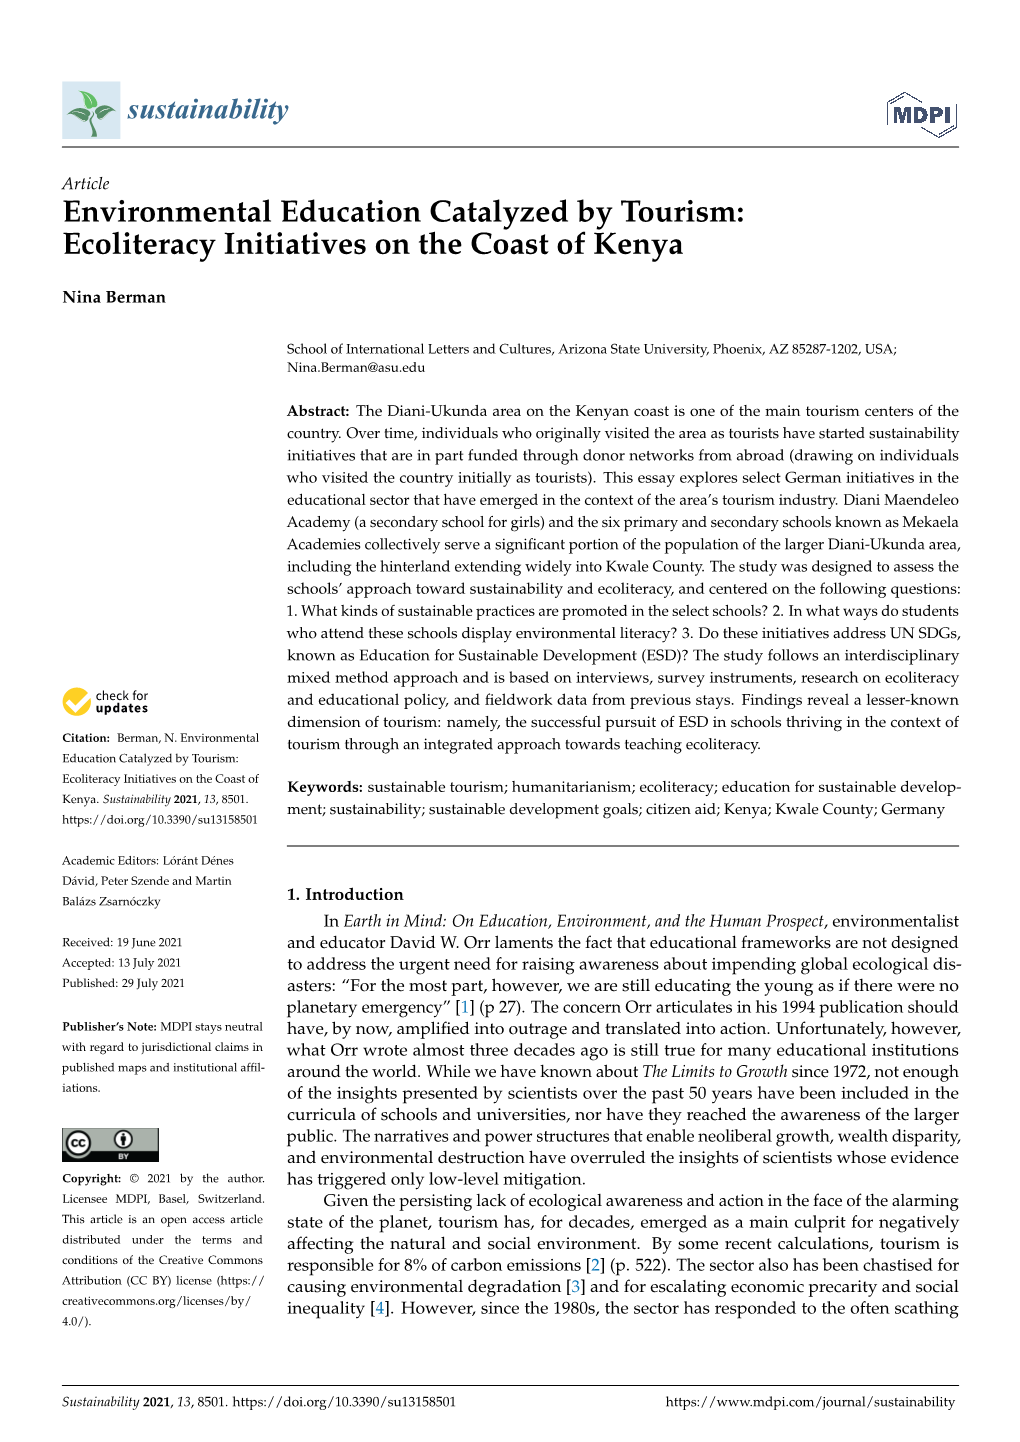 Environmental Education Catalyzed by Tourism: Ecoliteracy Initiatives on the Coast of Kenya